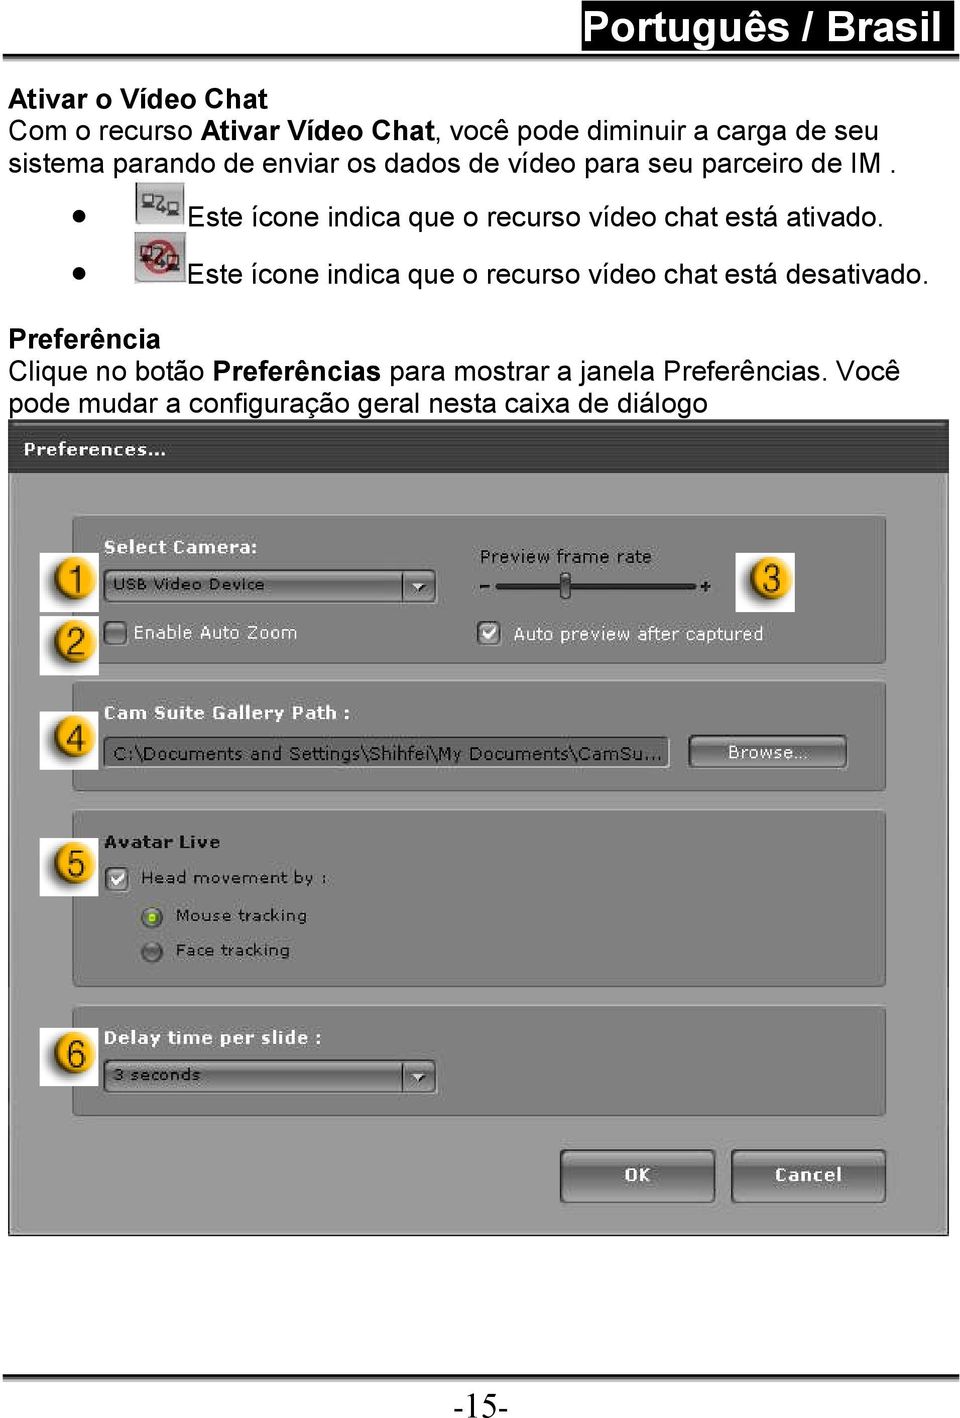 Este ícone indica que o recurso vídeo chat está ativado.